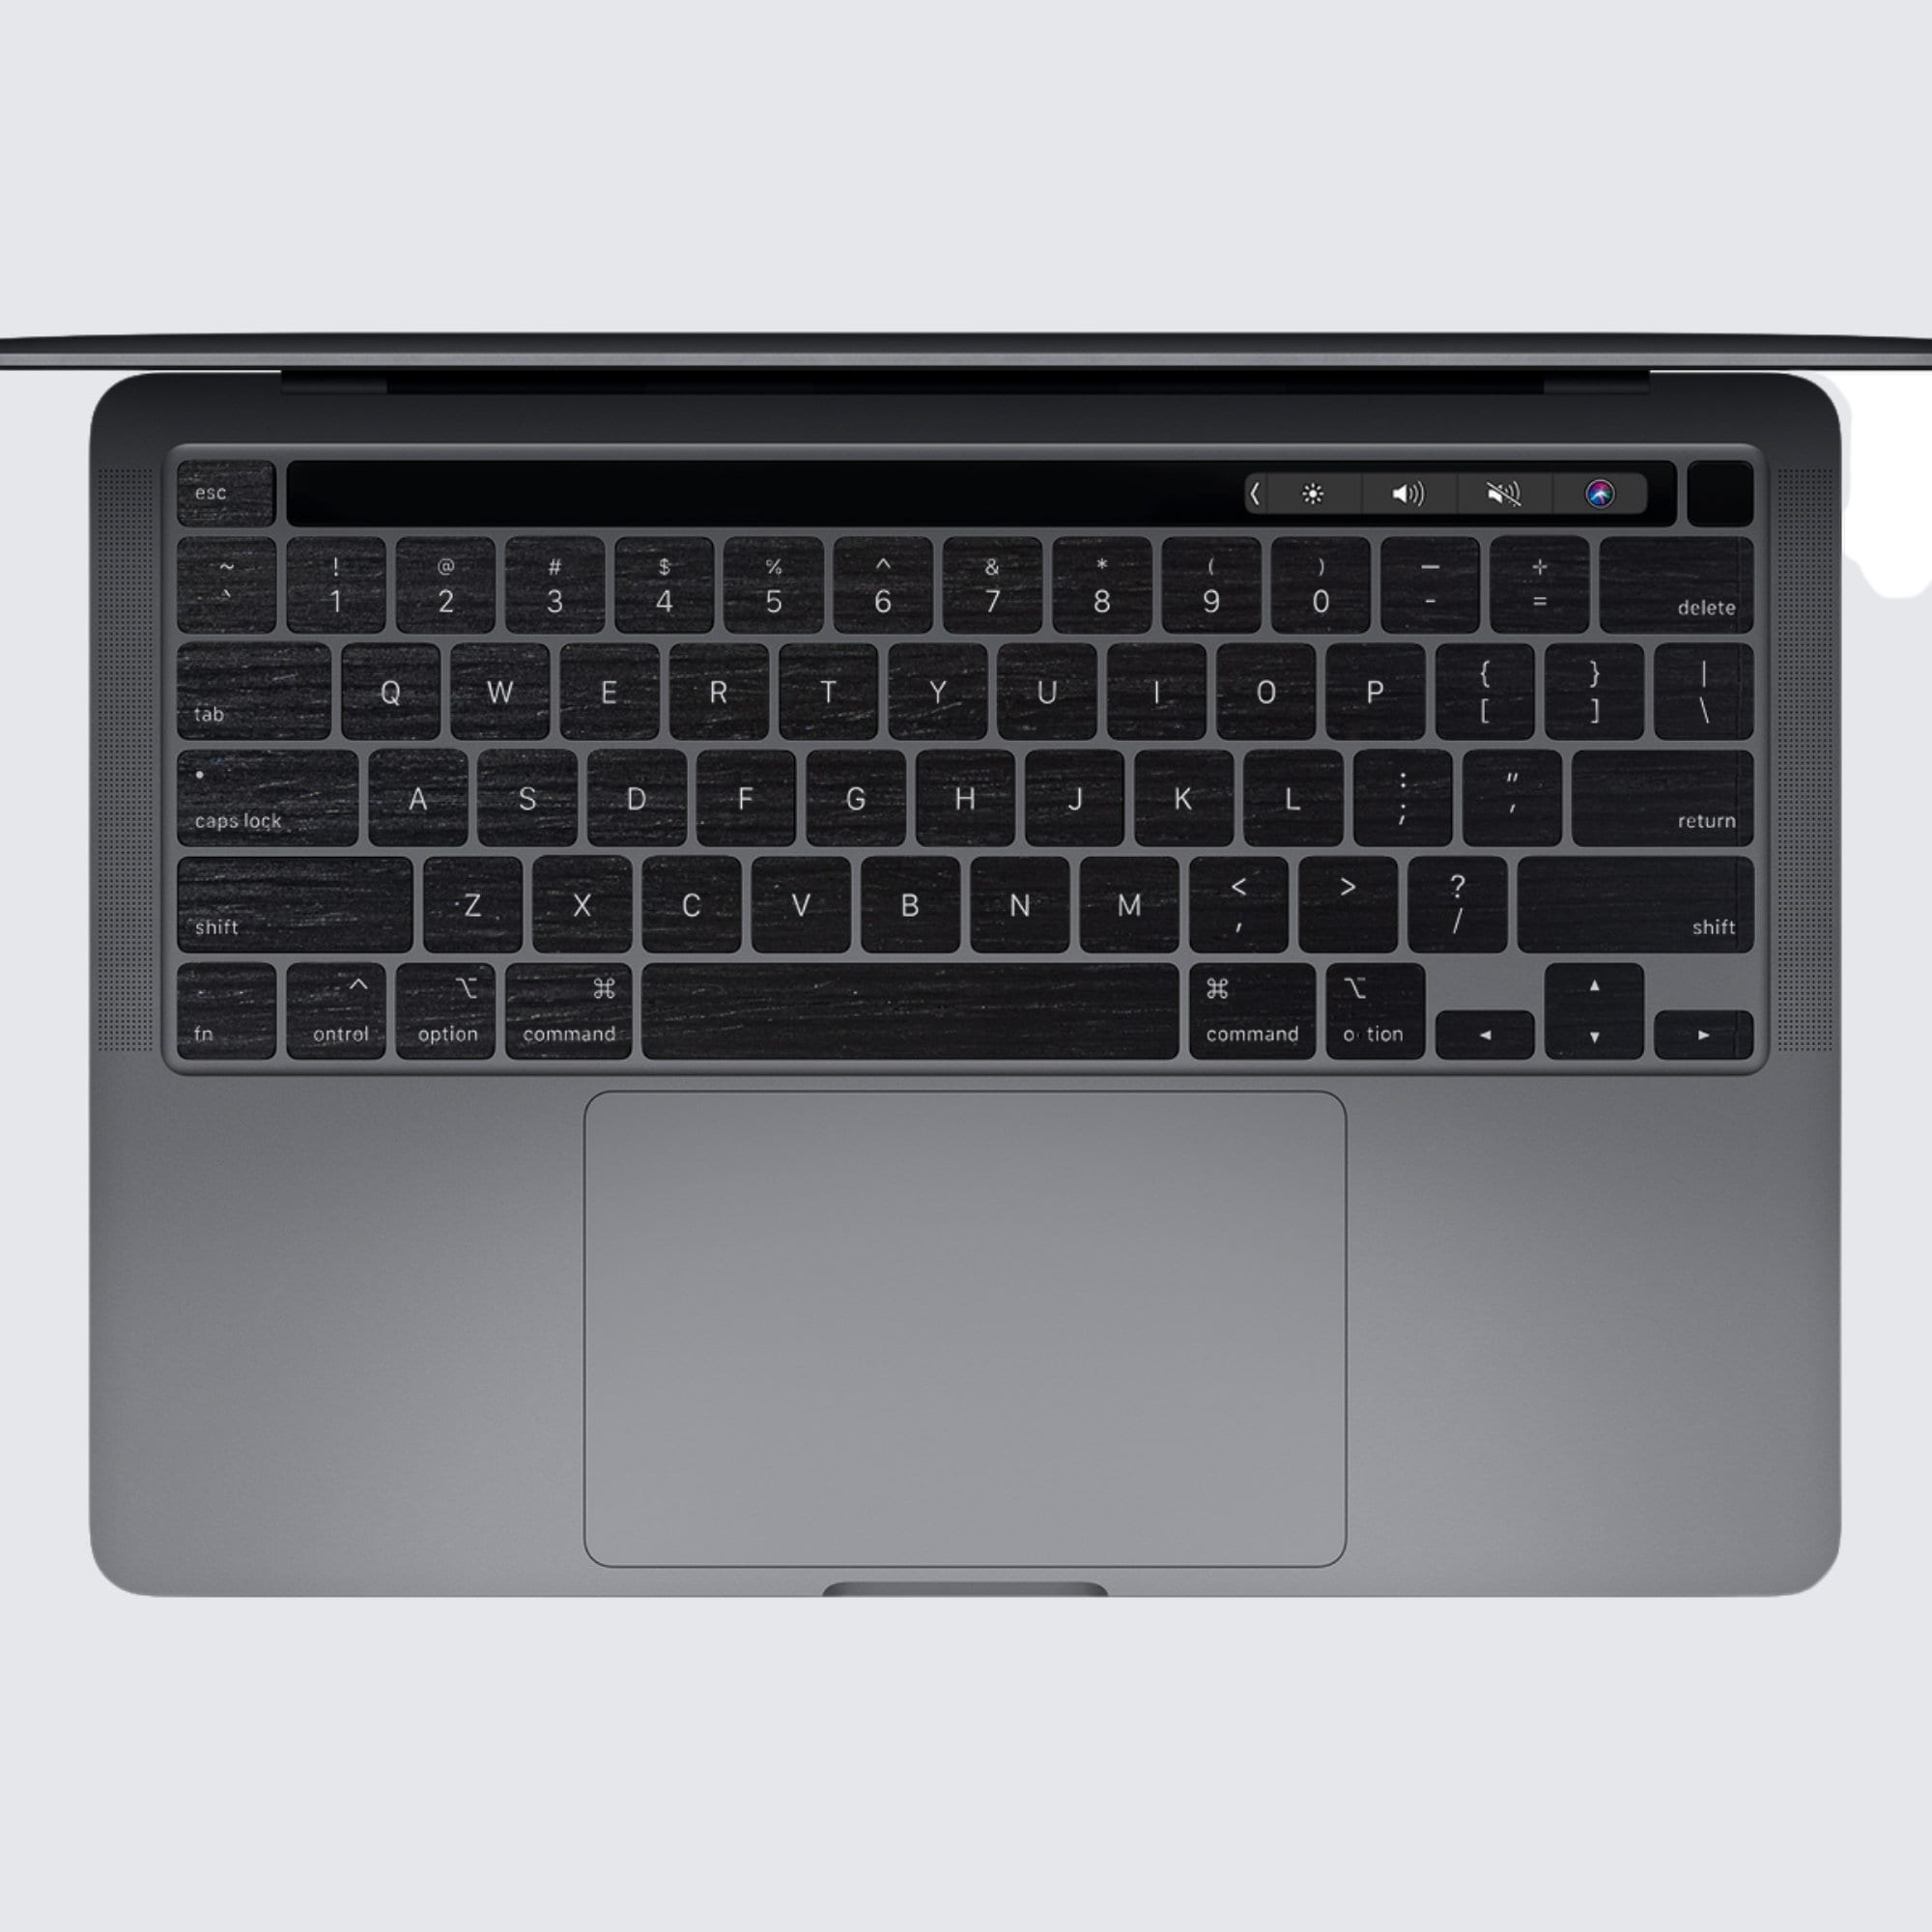 MacBook air keyboard cover -  Canada